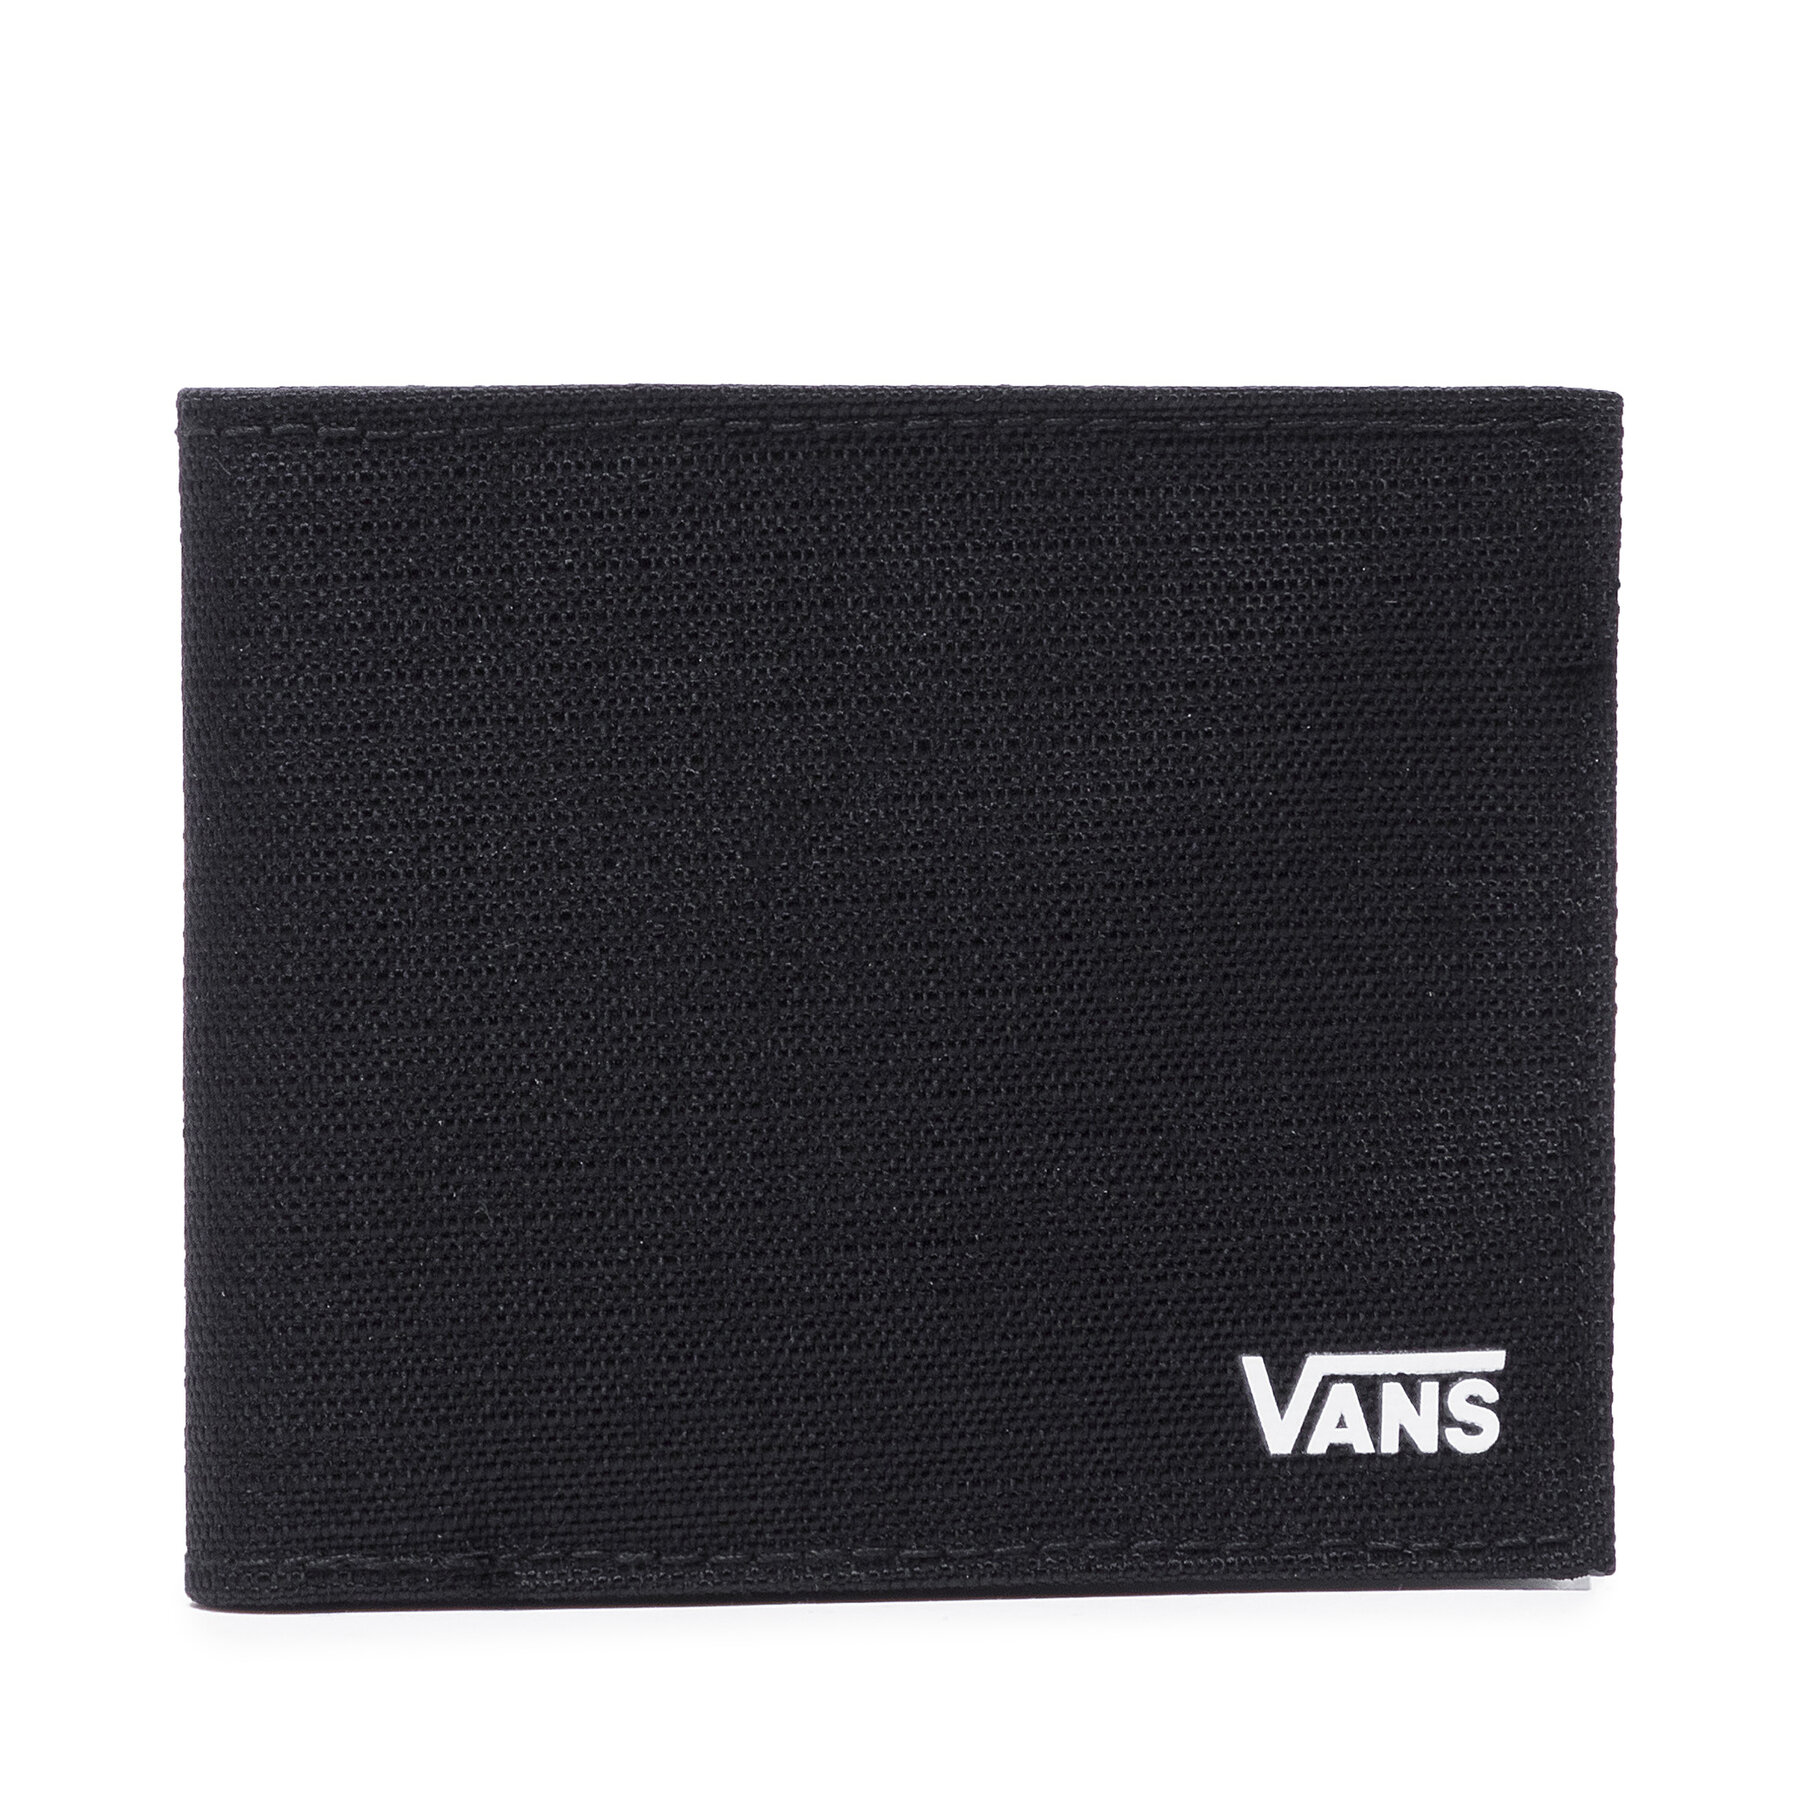 Velika moška denarnica Vans Ultra Thin VN0A4TPDY281 Black/White